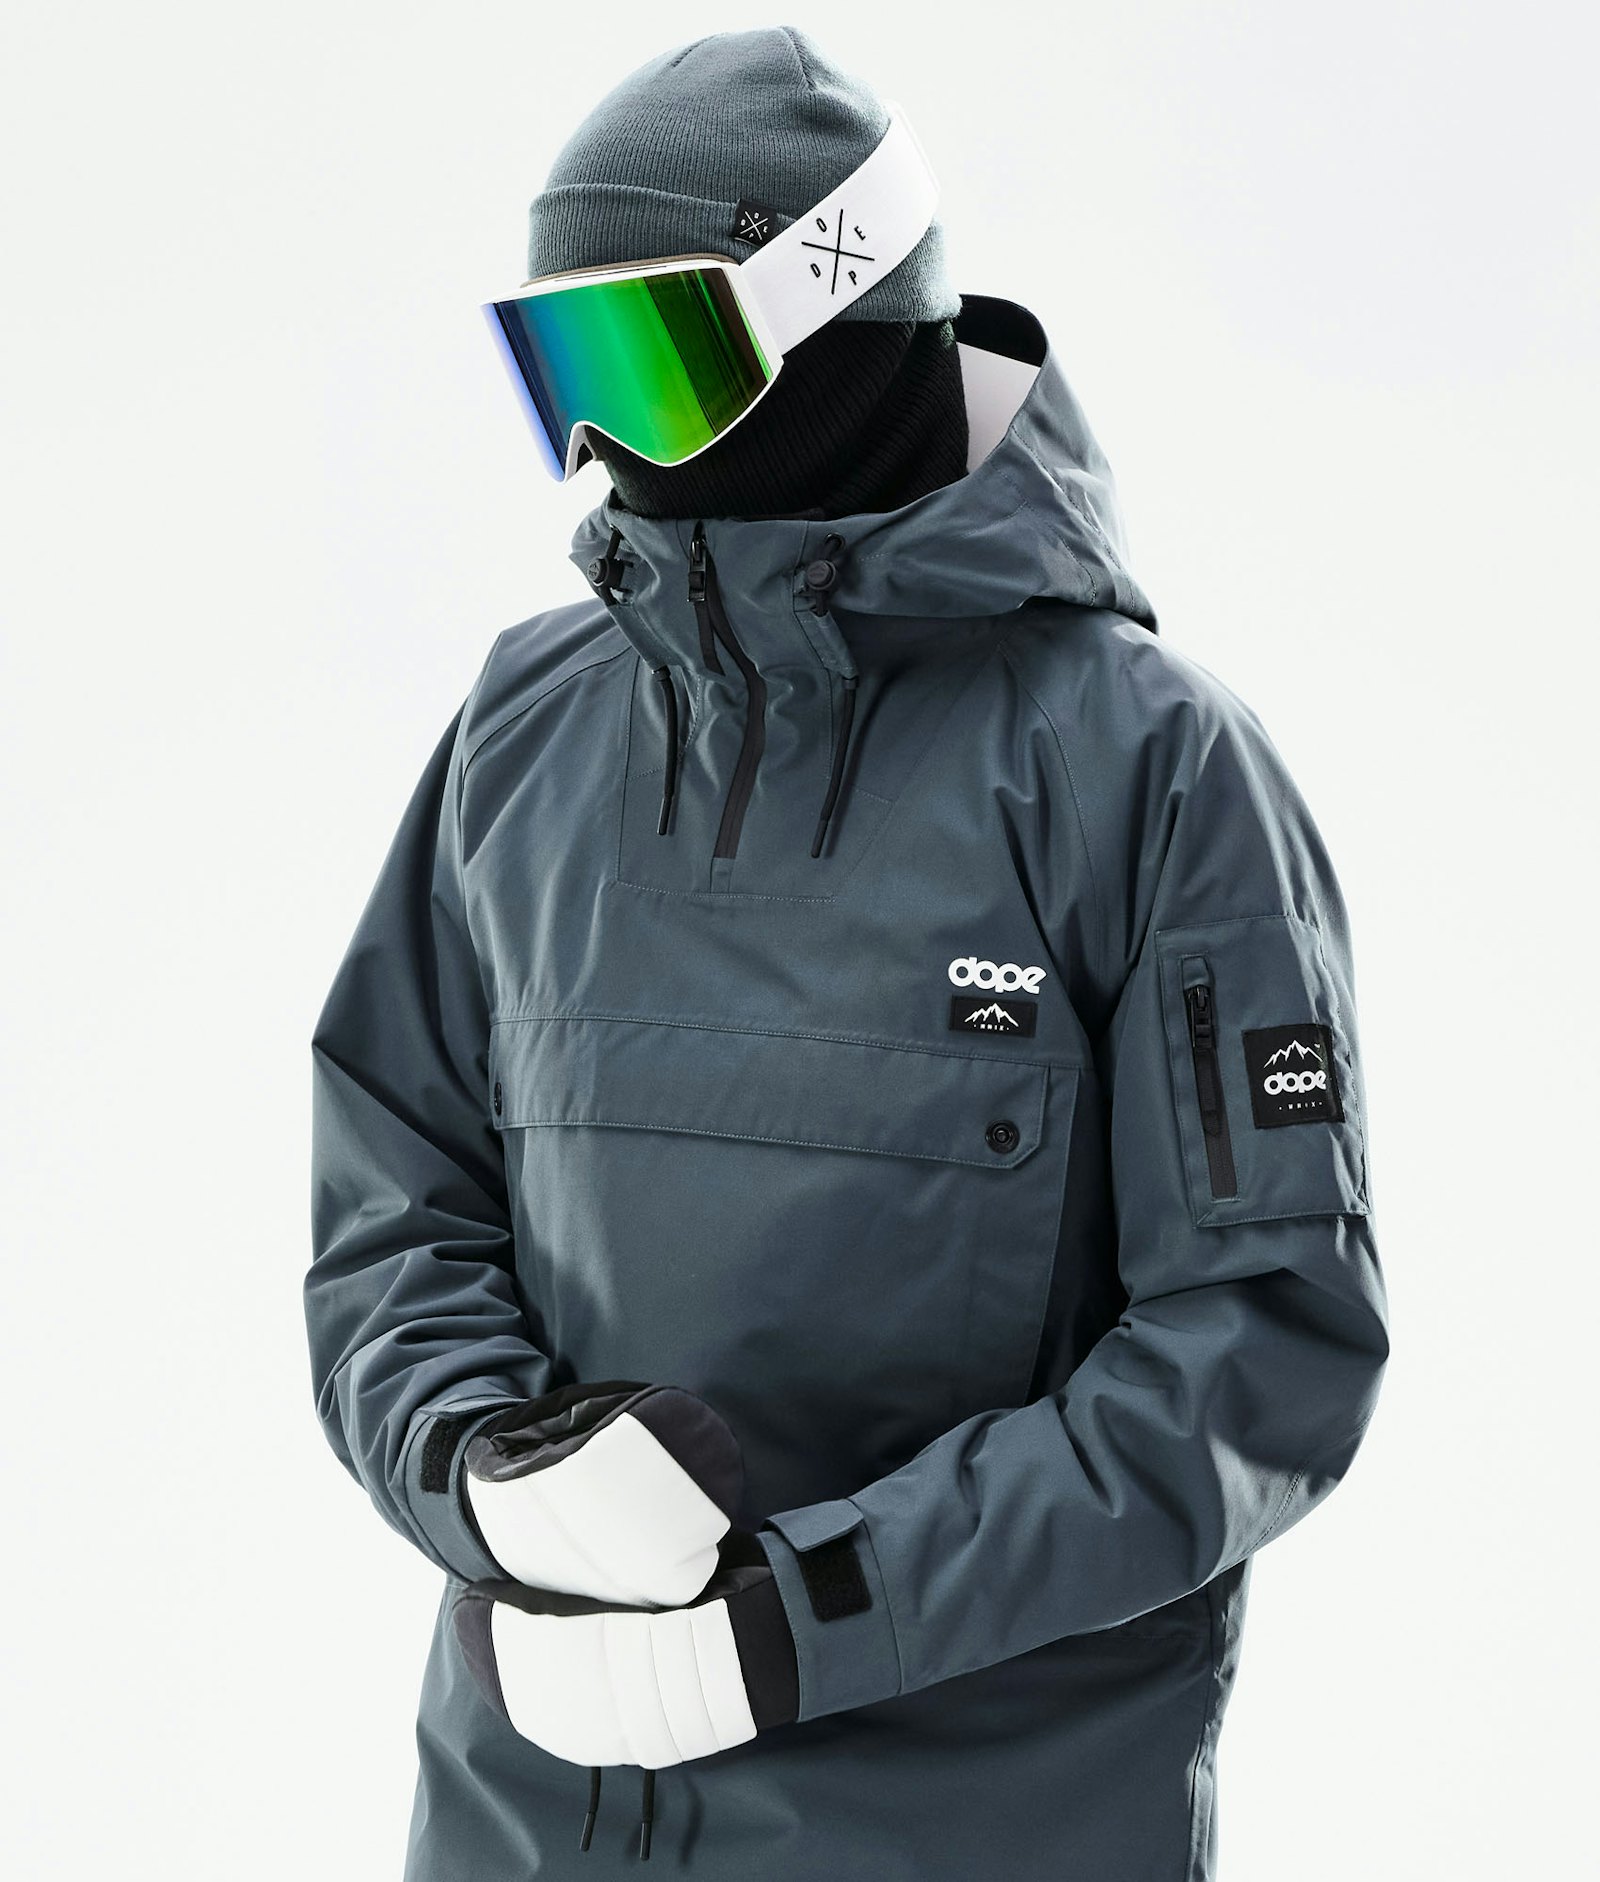 Annok 2021 Ski jas Heren Metal Blue